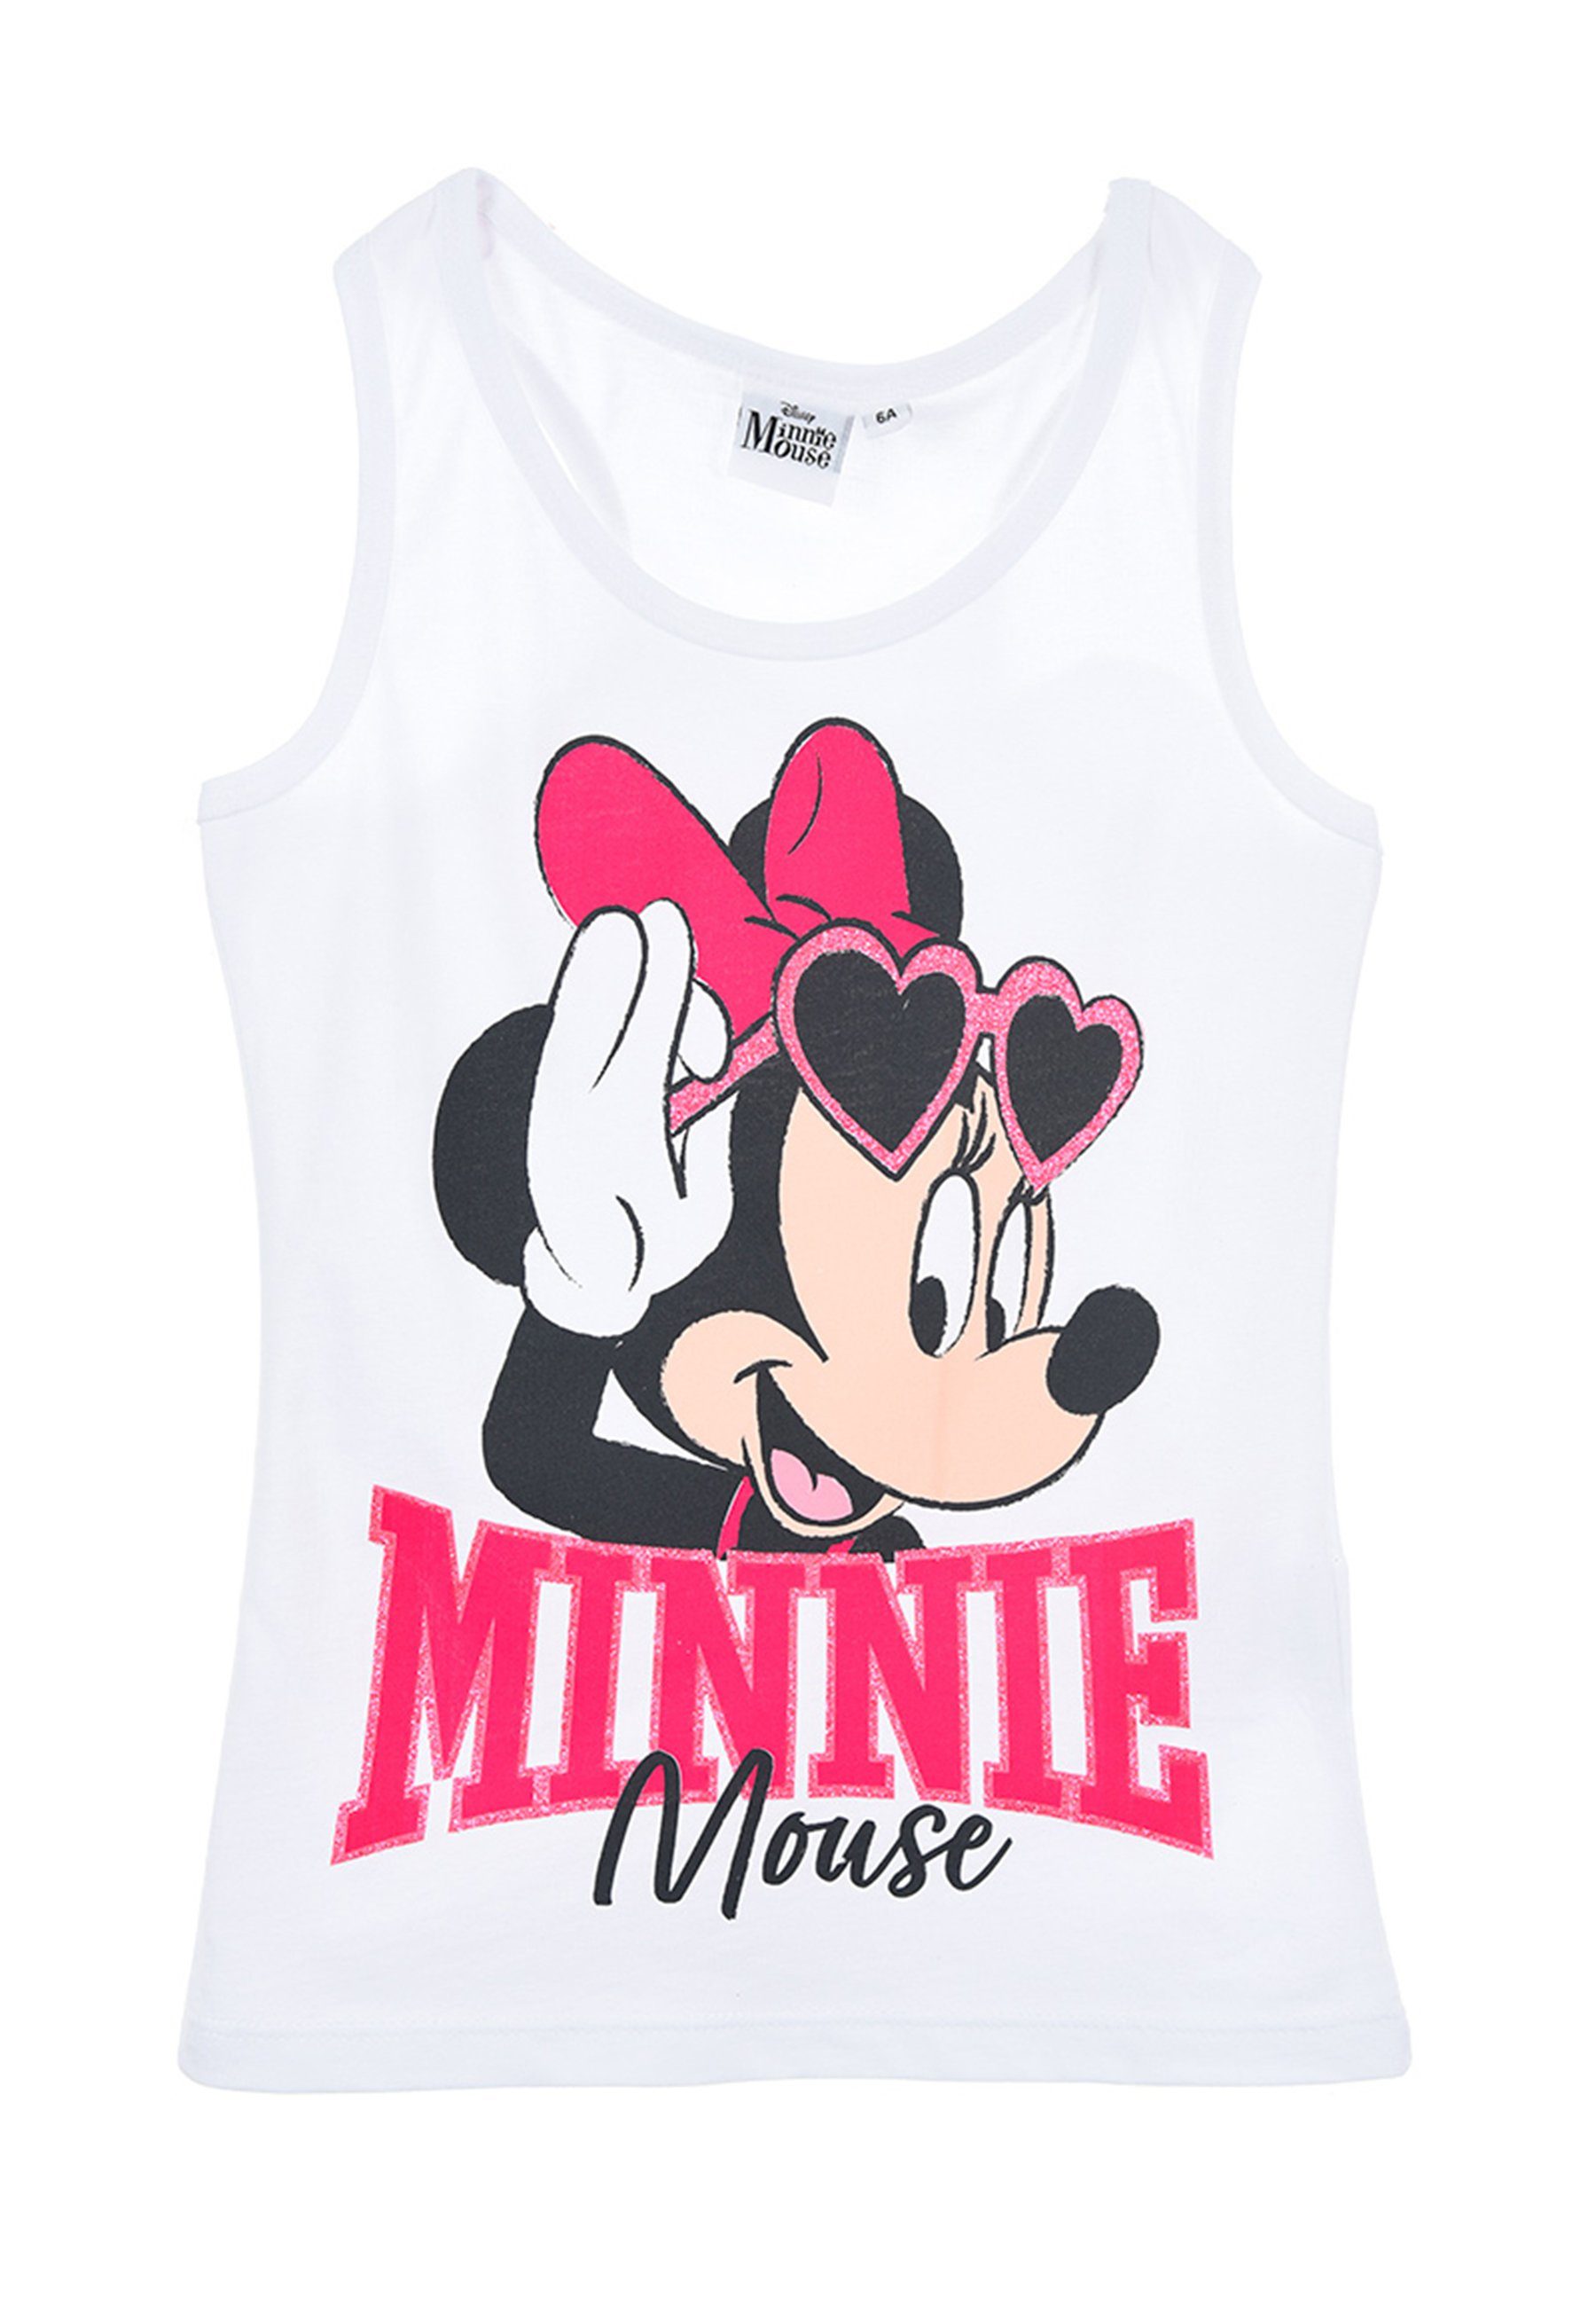 Disney Minnie Mouse Muskelshirt Mädchen Shirt Sommer Top Kinder Träger-Shirt